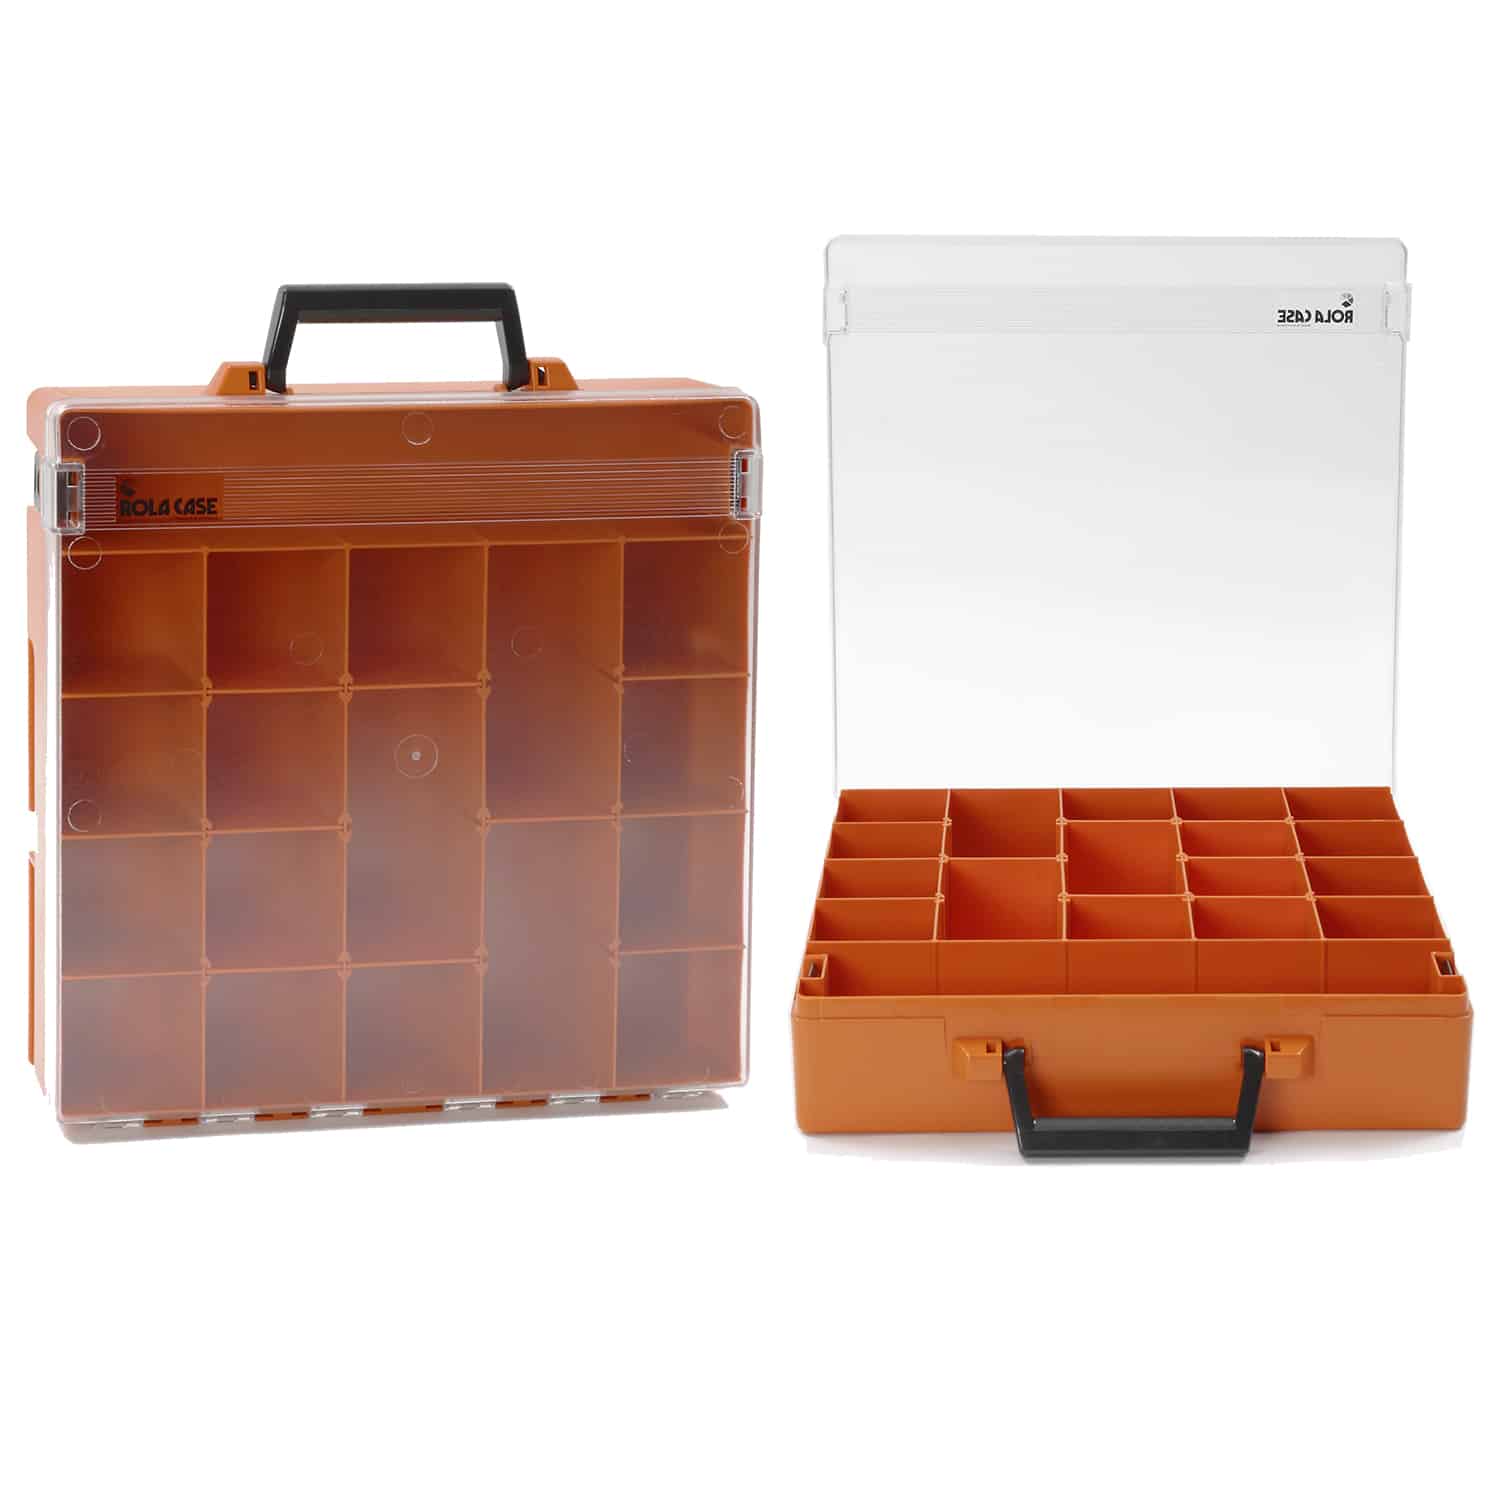 RCSK4/C Parts Organizer Cabinet Kit